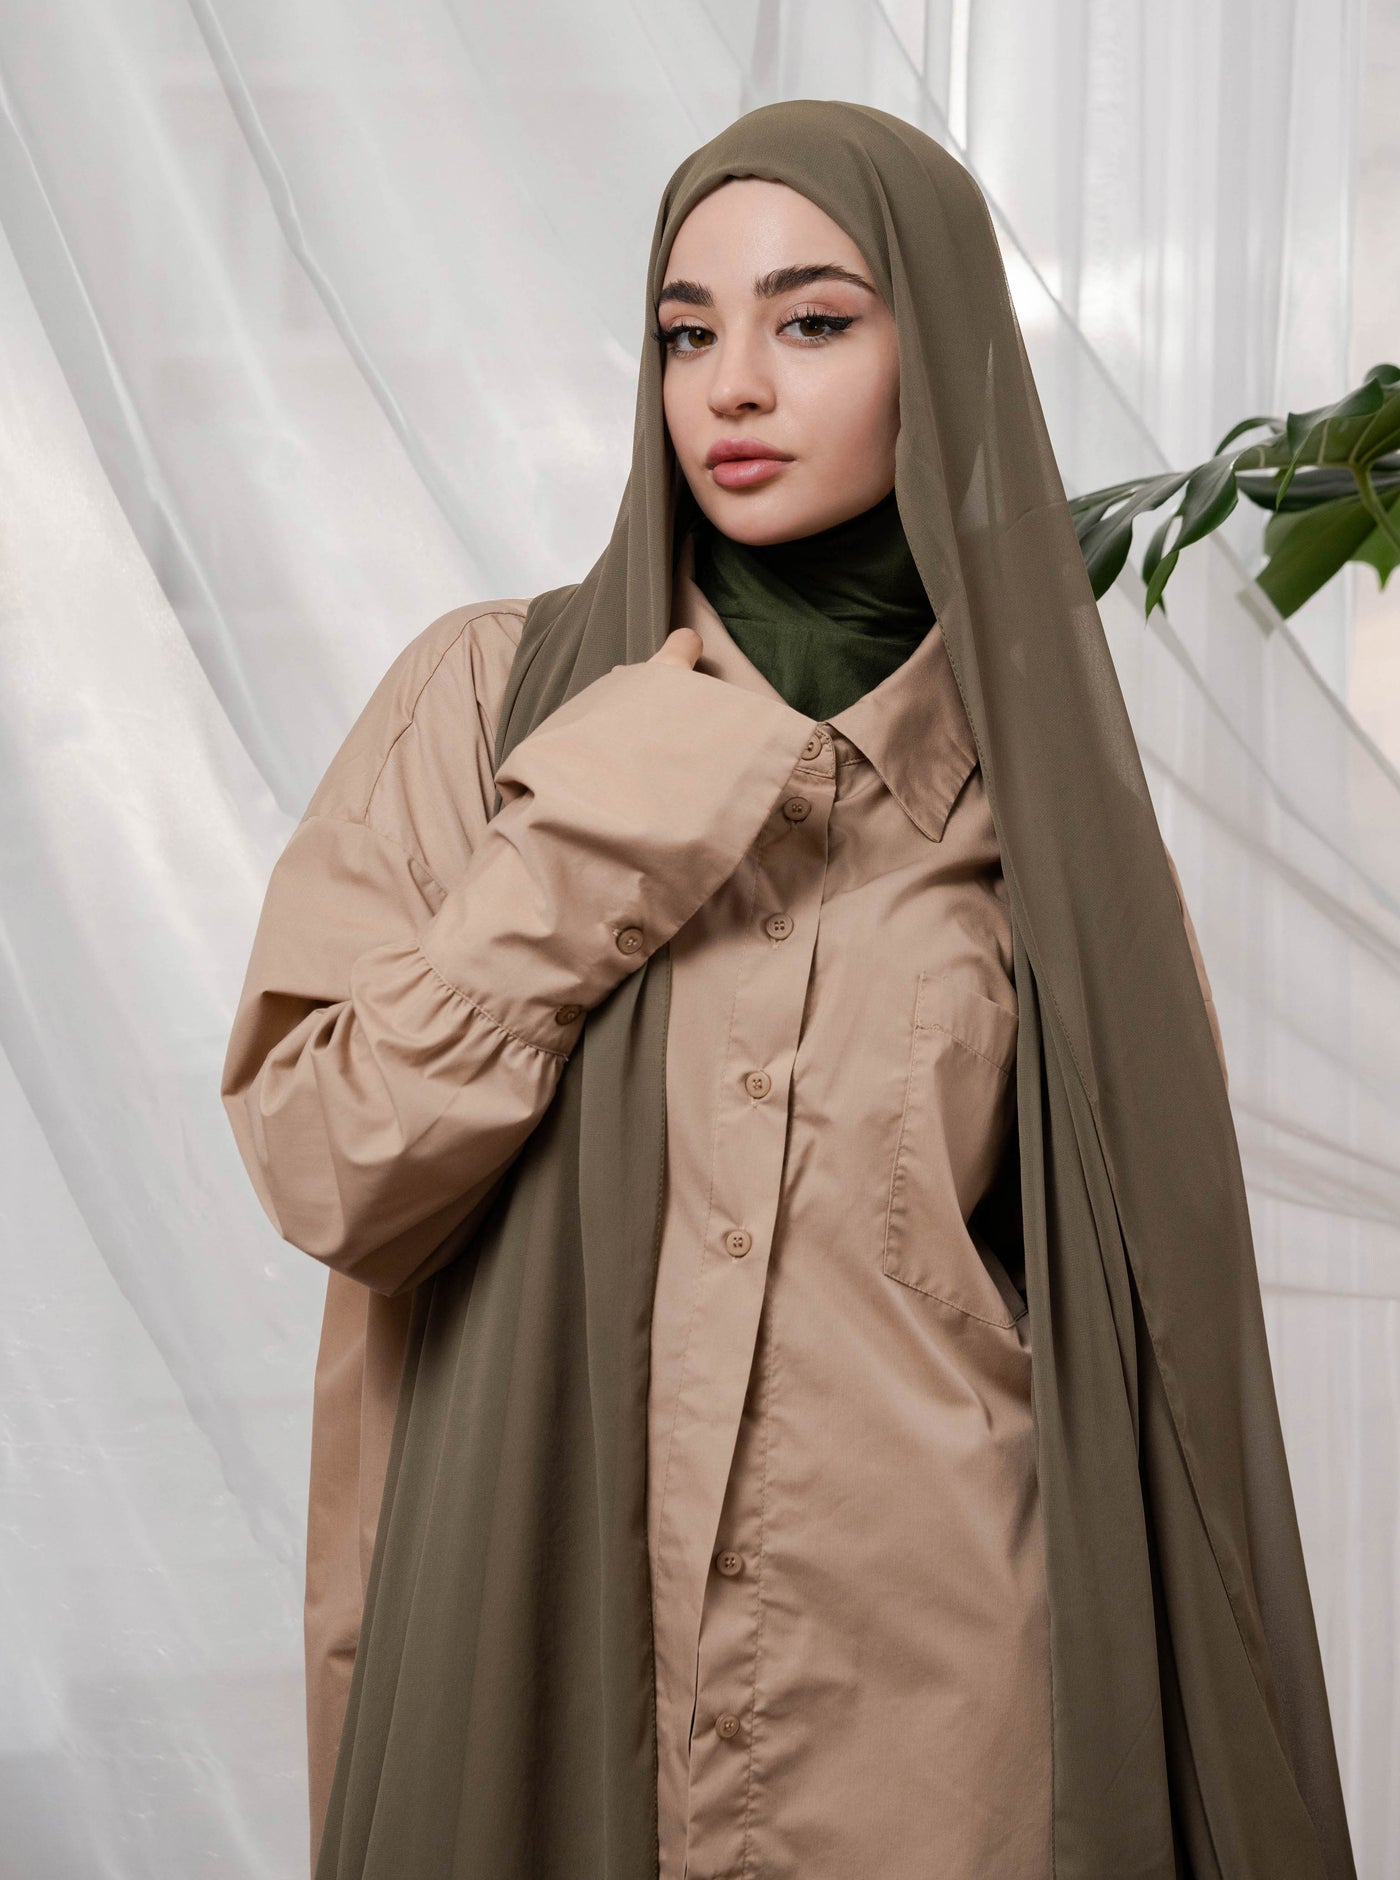 Fertiger Chiffon Hijab mit full-coverage Bonnet – khaki